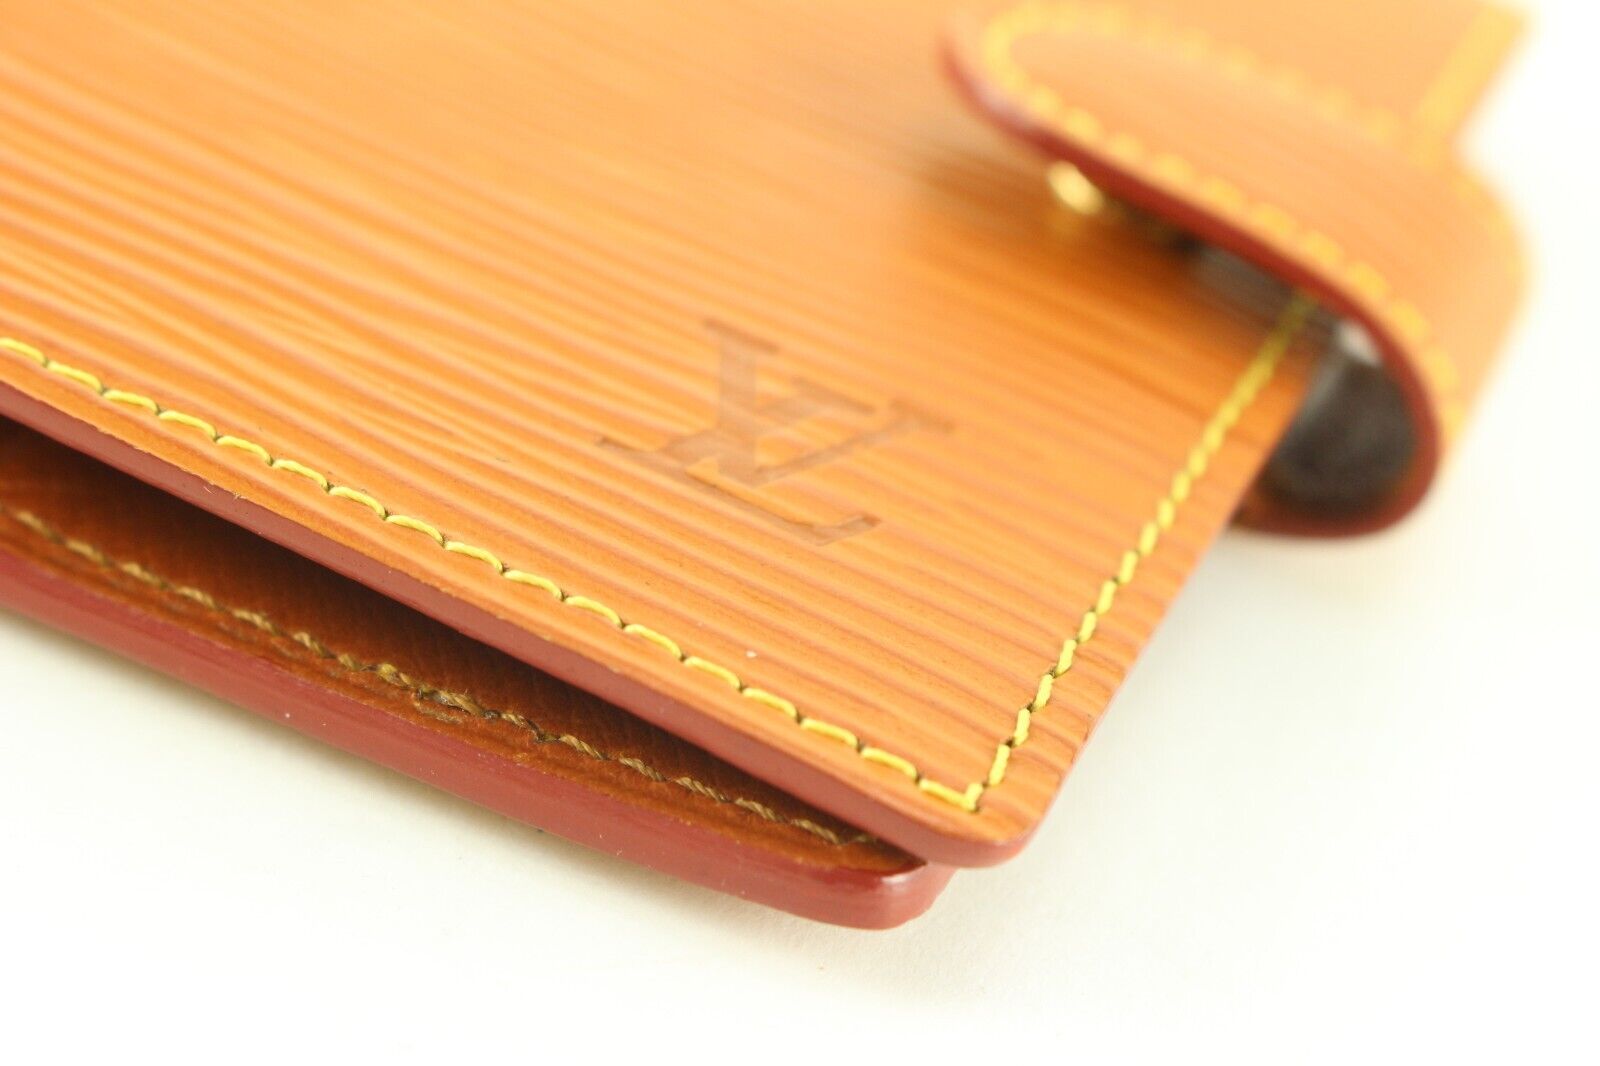 Louis Vuitton Cognac Epi Leather Mini Card Holder Agenda Organizer 5LK0125